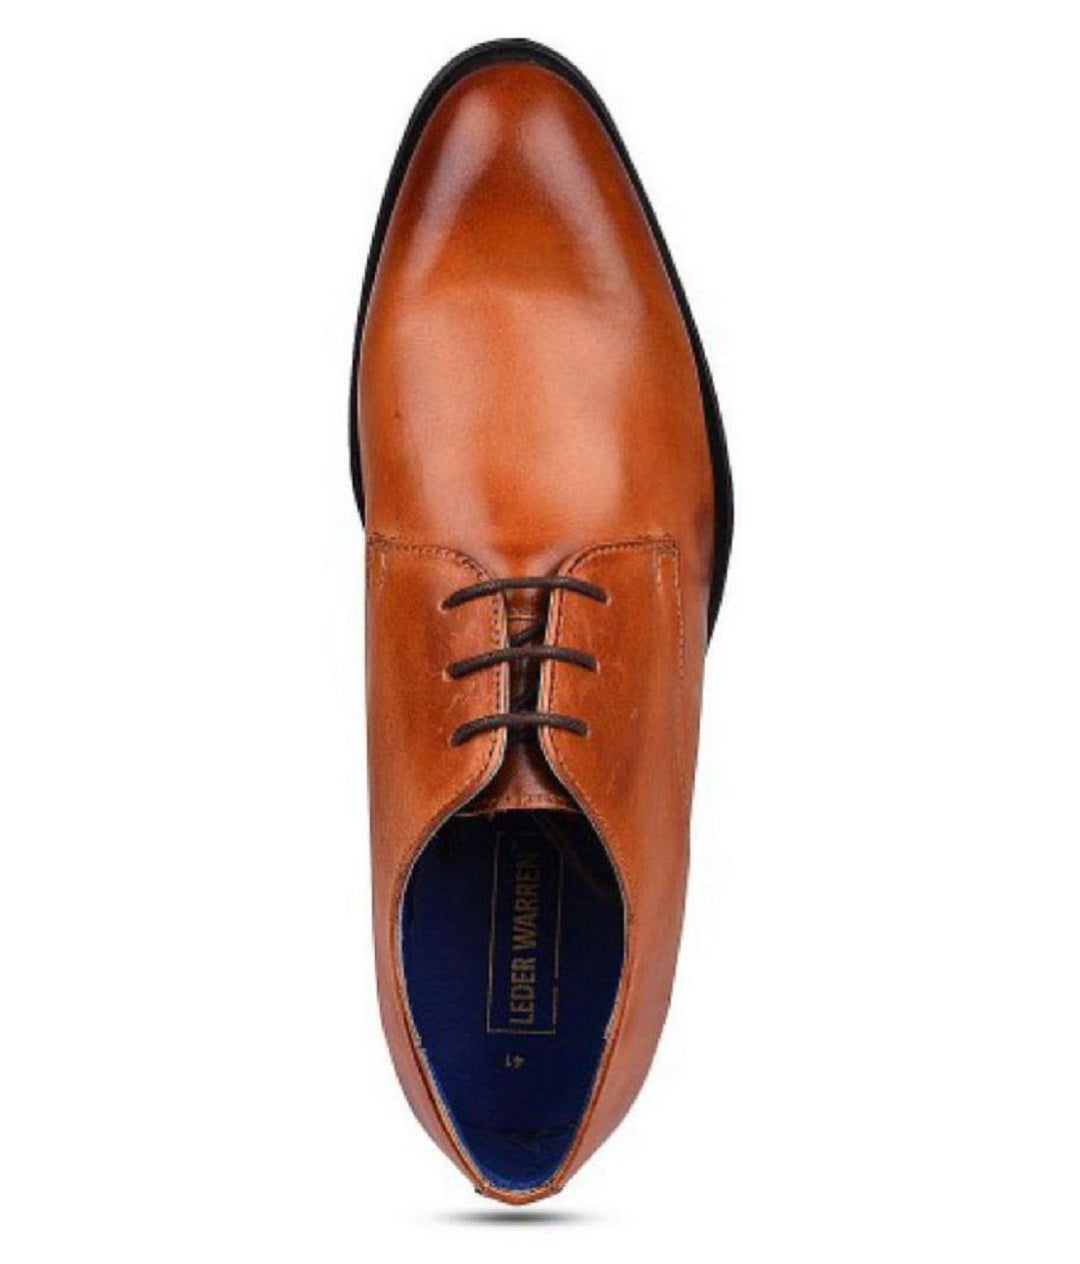 FORMAL SHOES Beniamino  leather Formal Derby Shoes leaderwarren